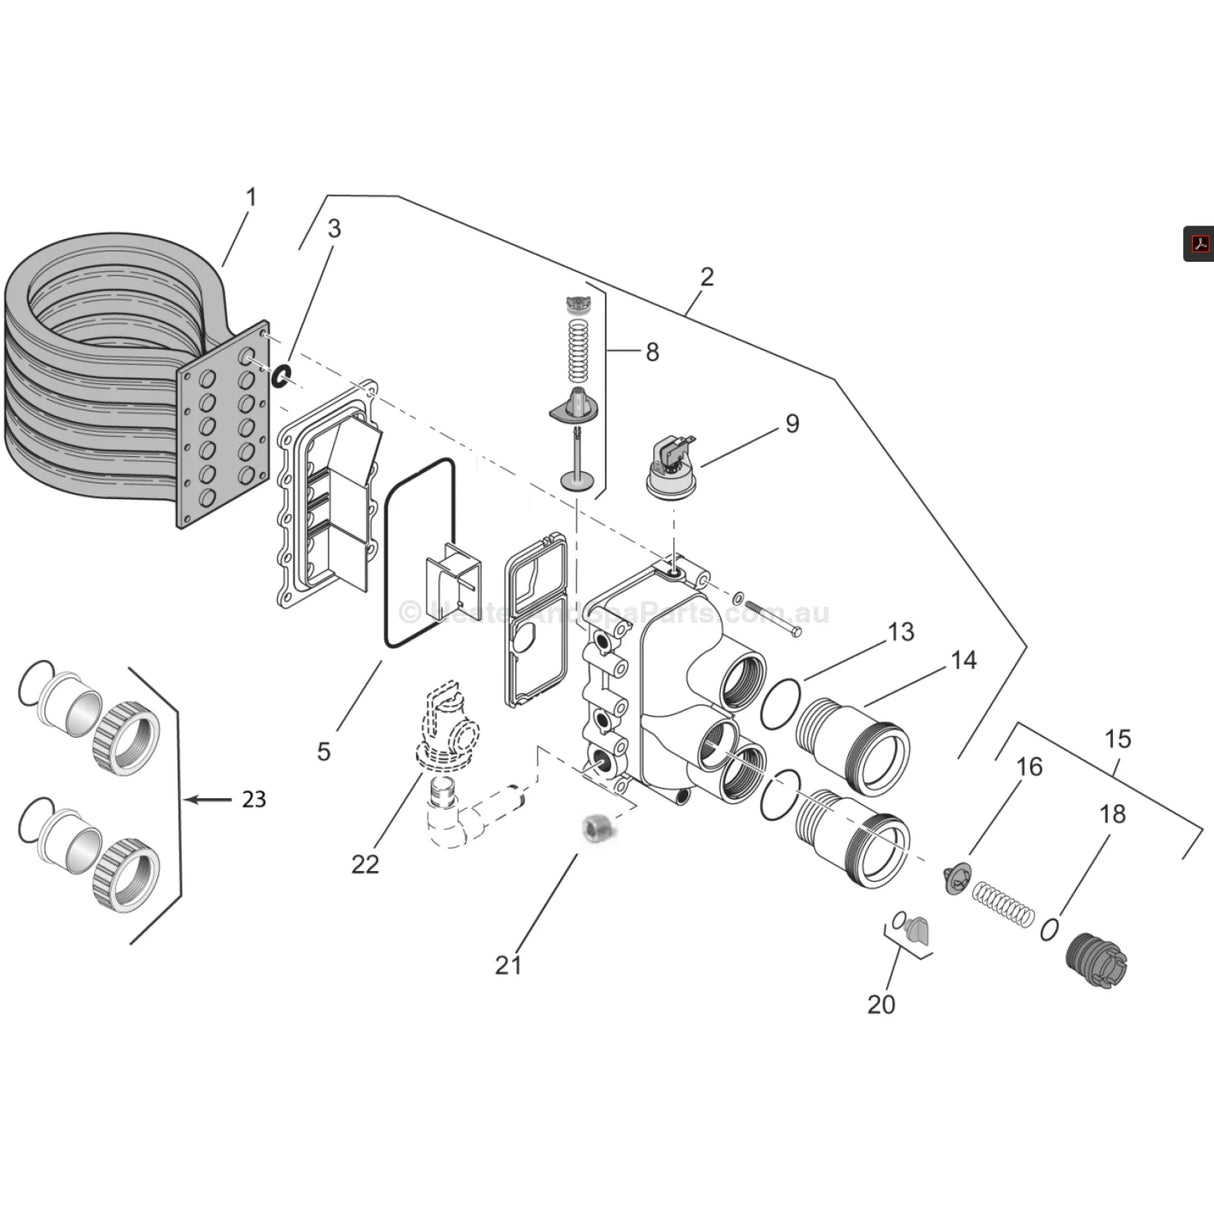 Pentair Mastertemp - Tube Seal Kit (Heat Exchanger O-rings) - Heater and Spa Parts